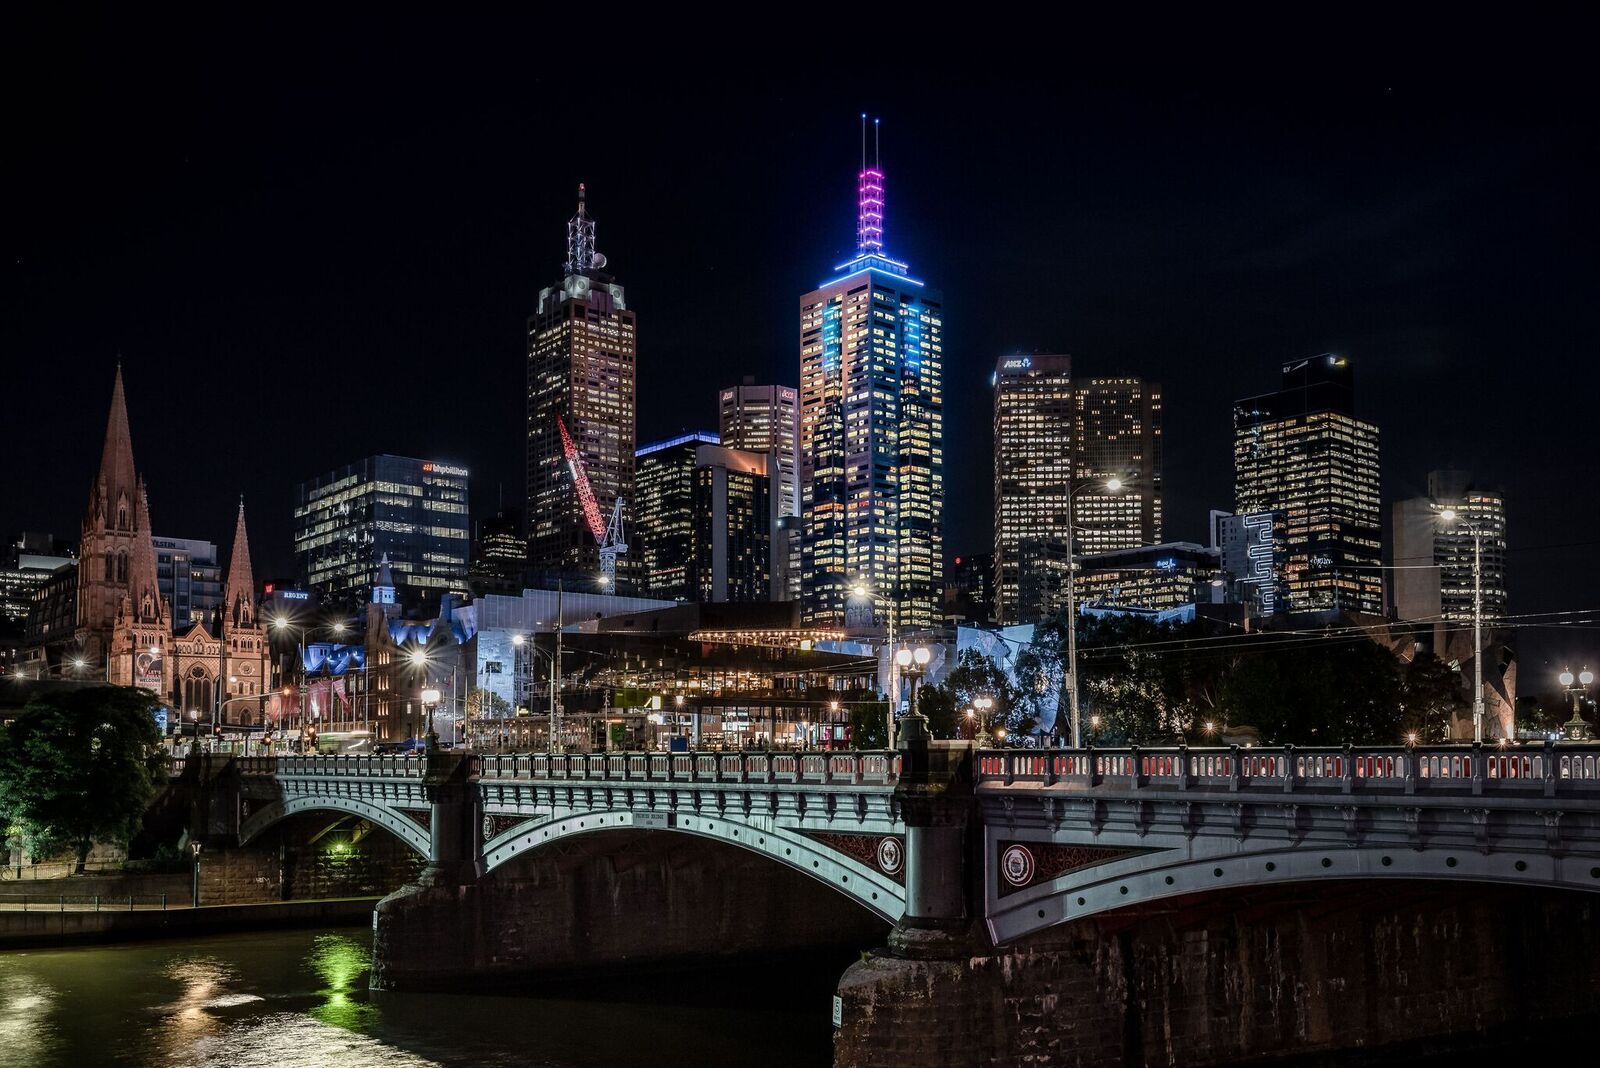 Melbourne CBD skyline lit up at night